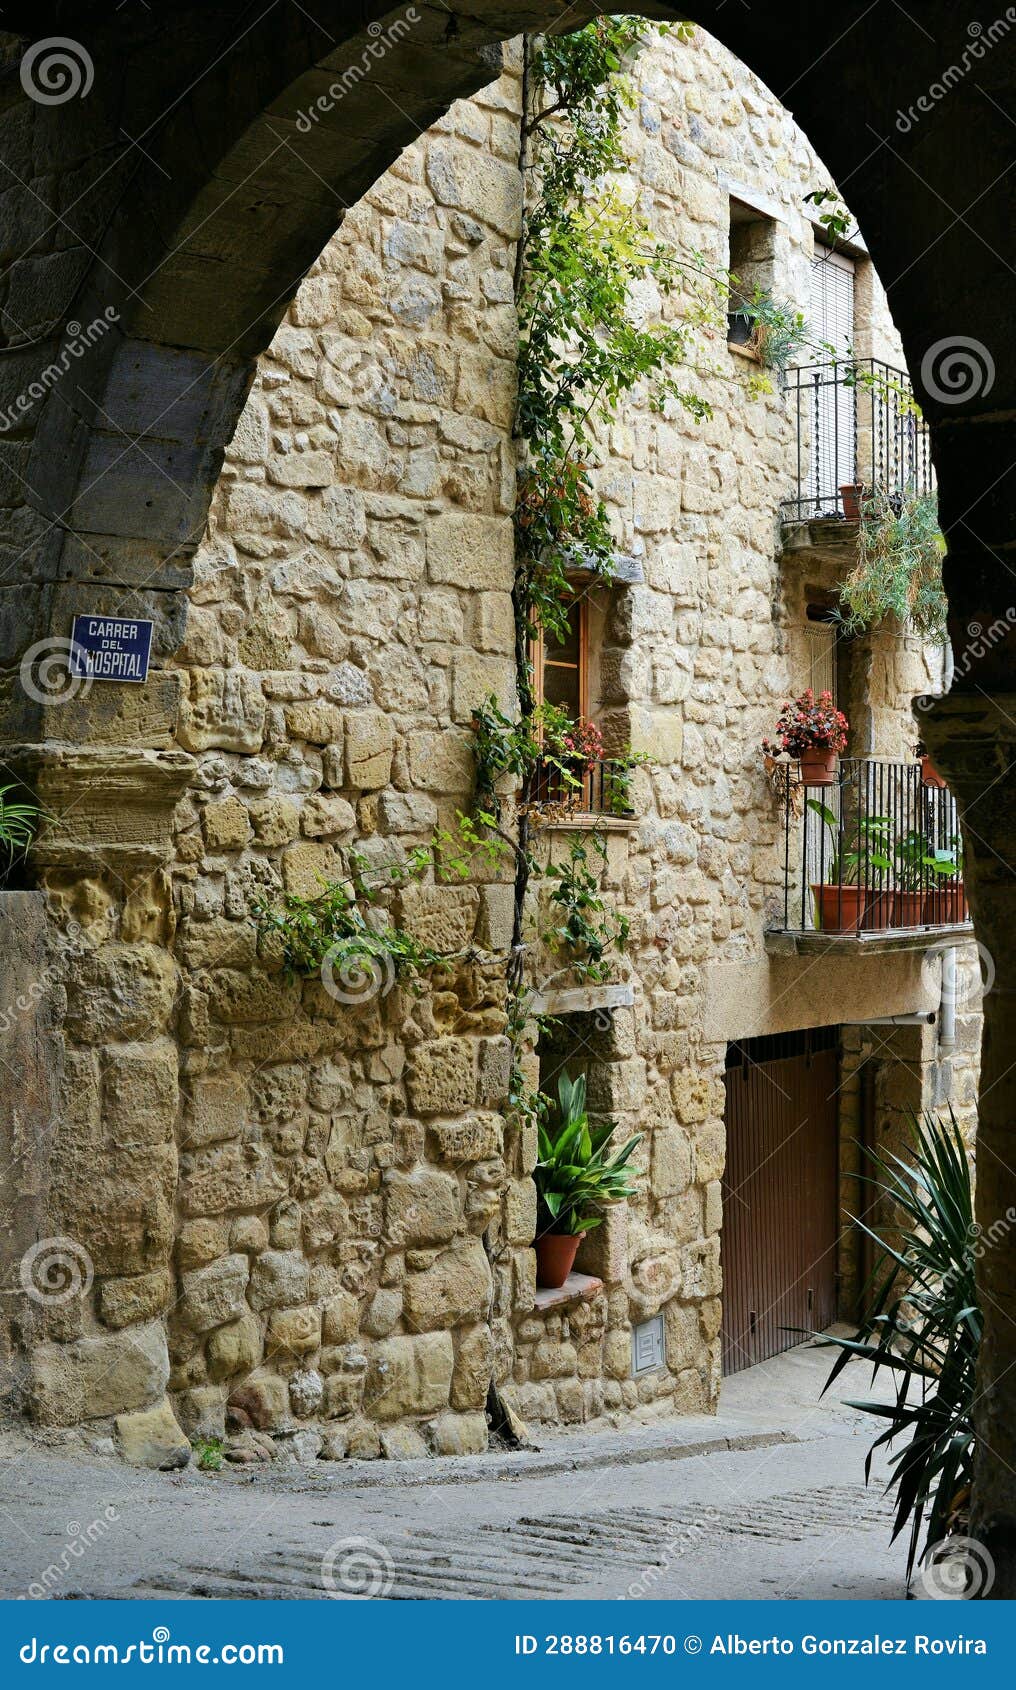 historic center of horta de sant joan in the terra alta region, province of tarragona, catalonia, spain